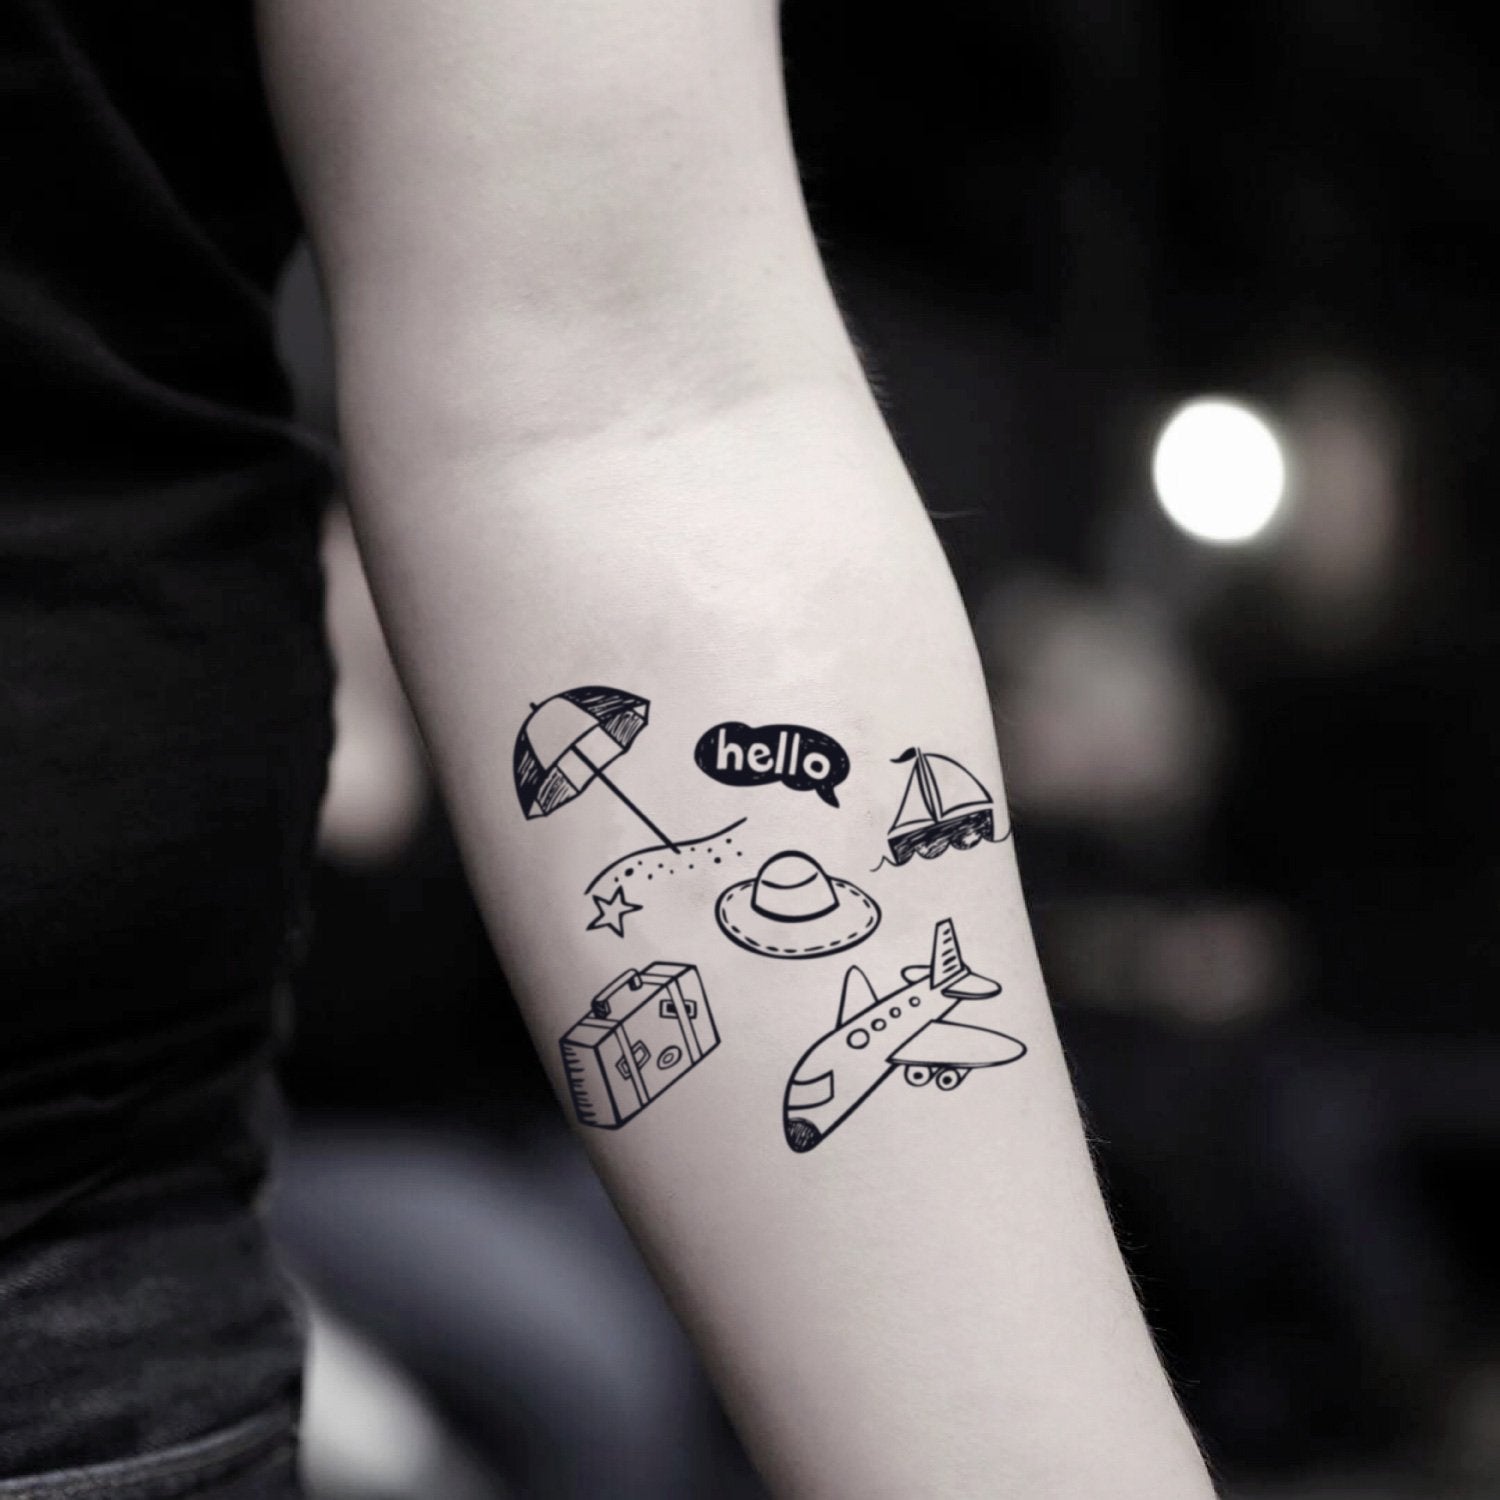 fake small doodle sleeve illustrative temporary tattoo sticker design idea on inner arm